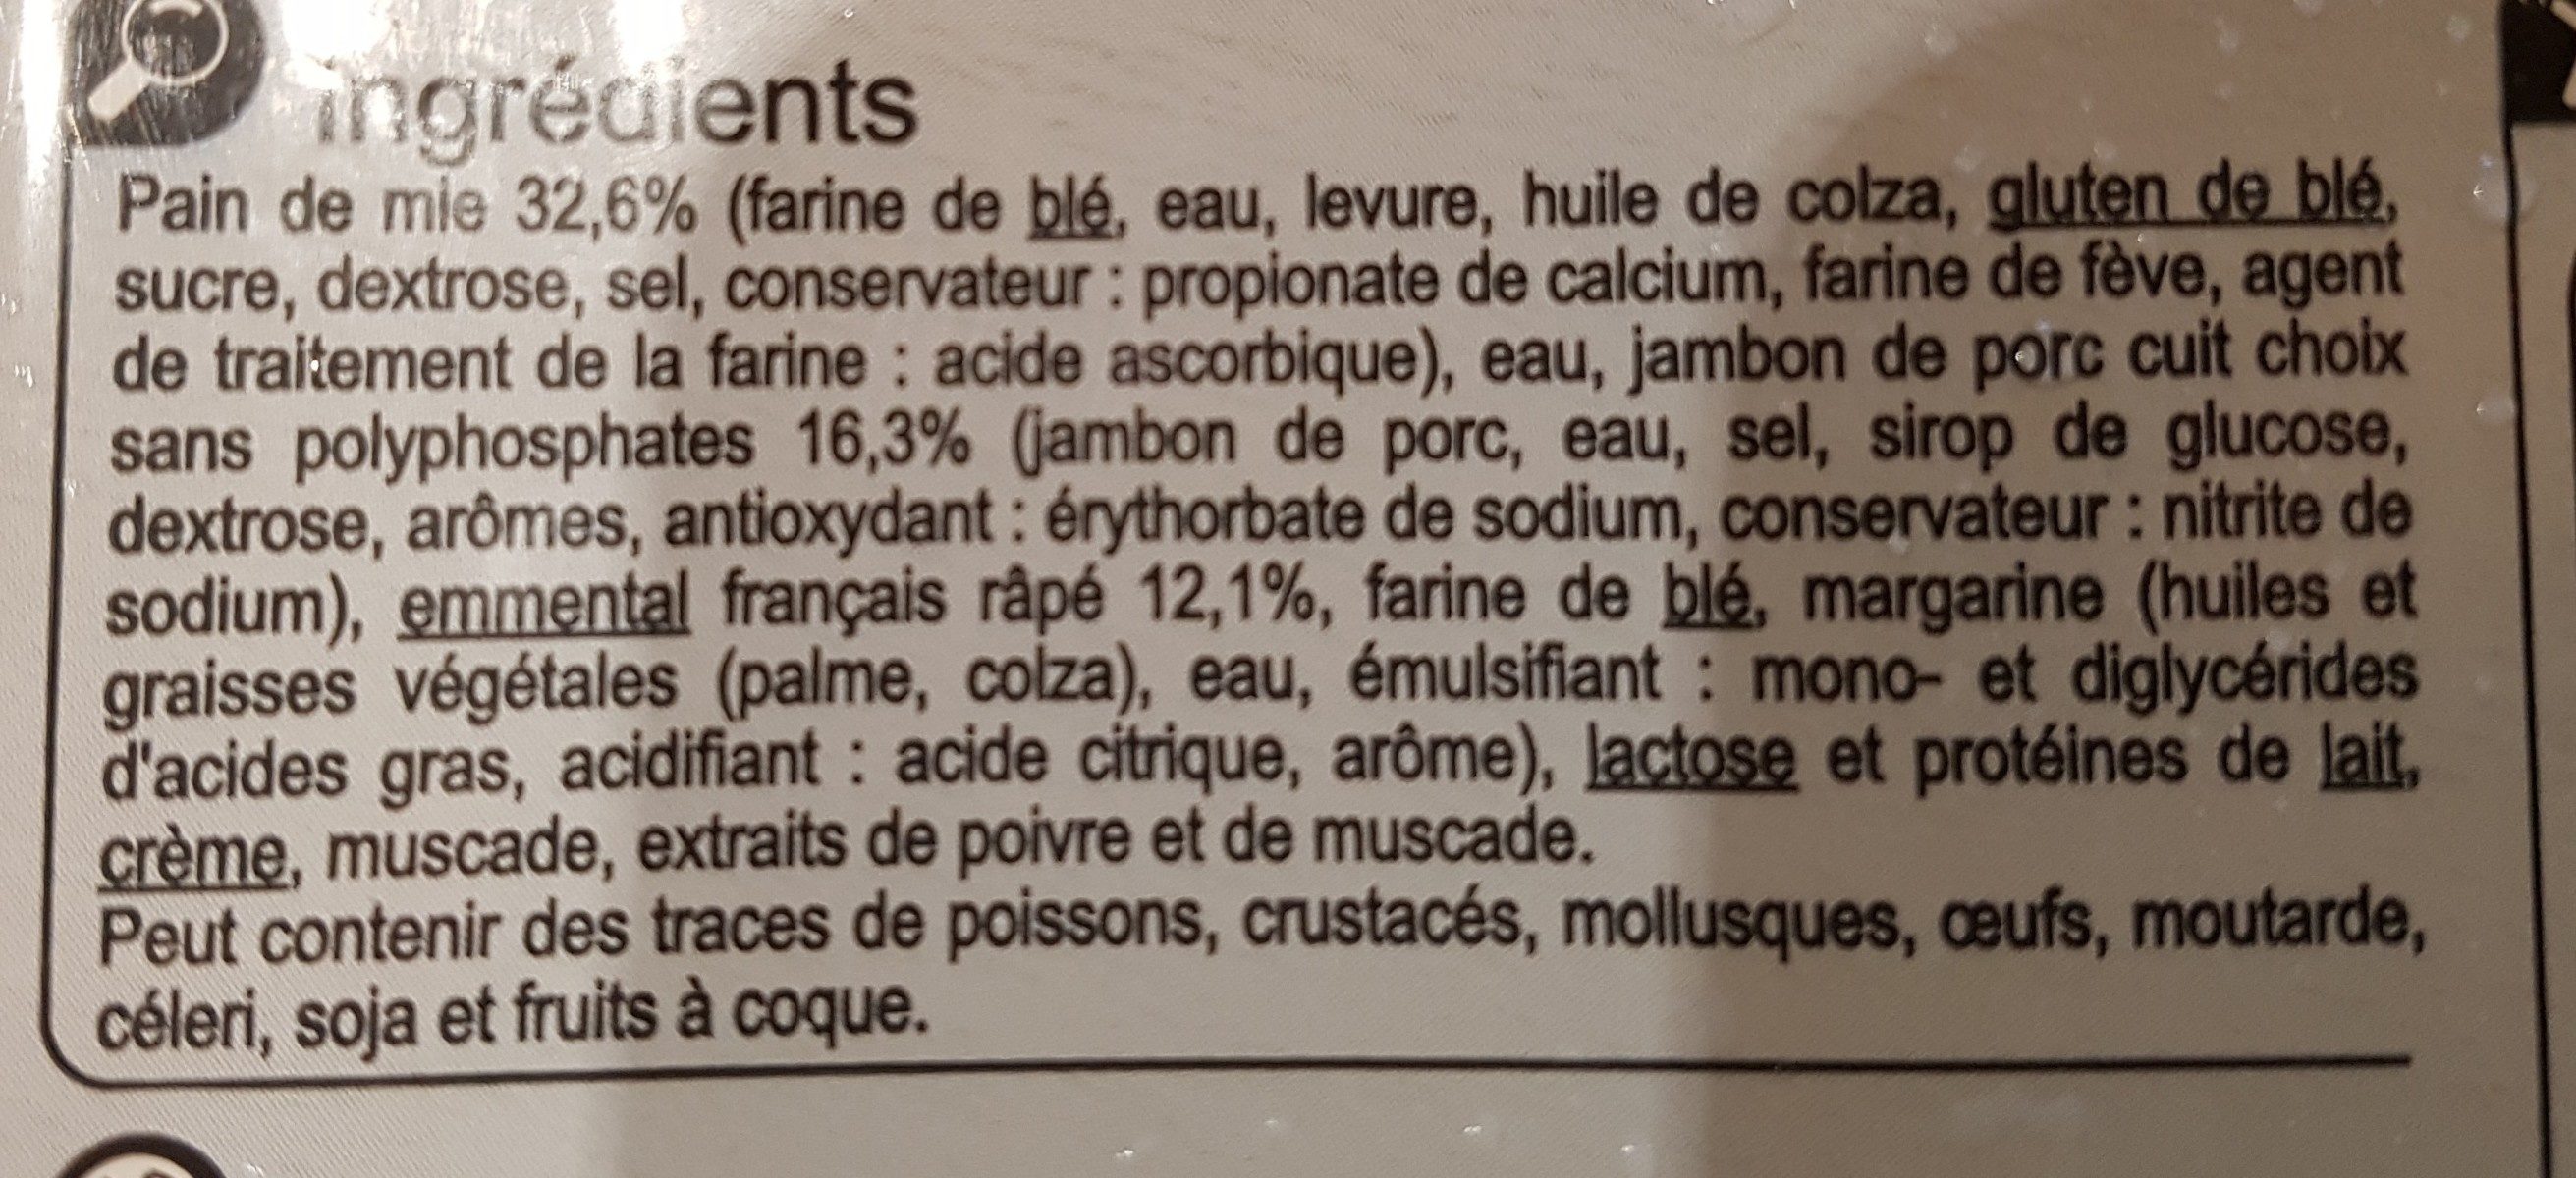 Croque-monsieur gratiné - Ingredients - fr